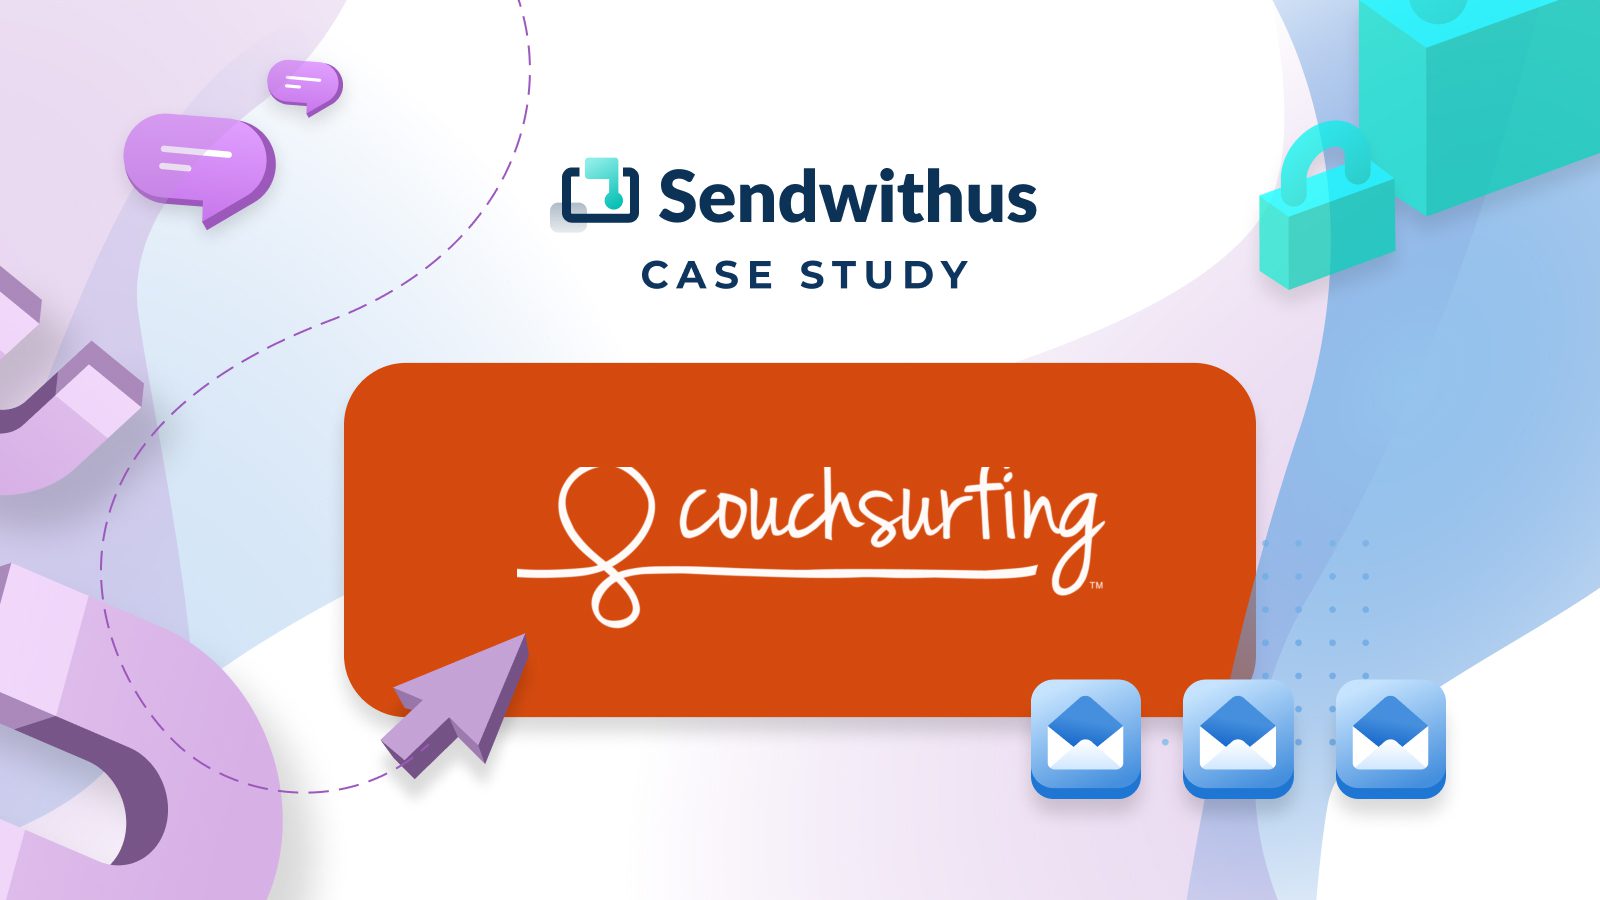 Case study - Couchsurfing